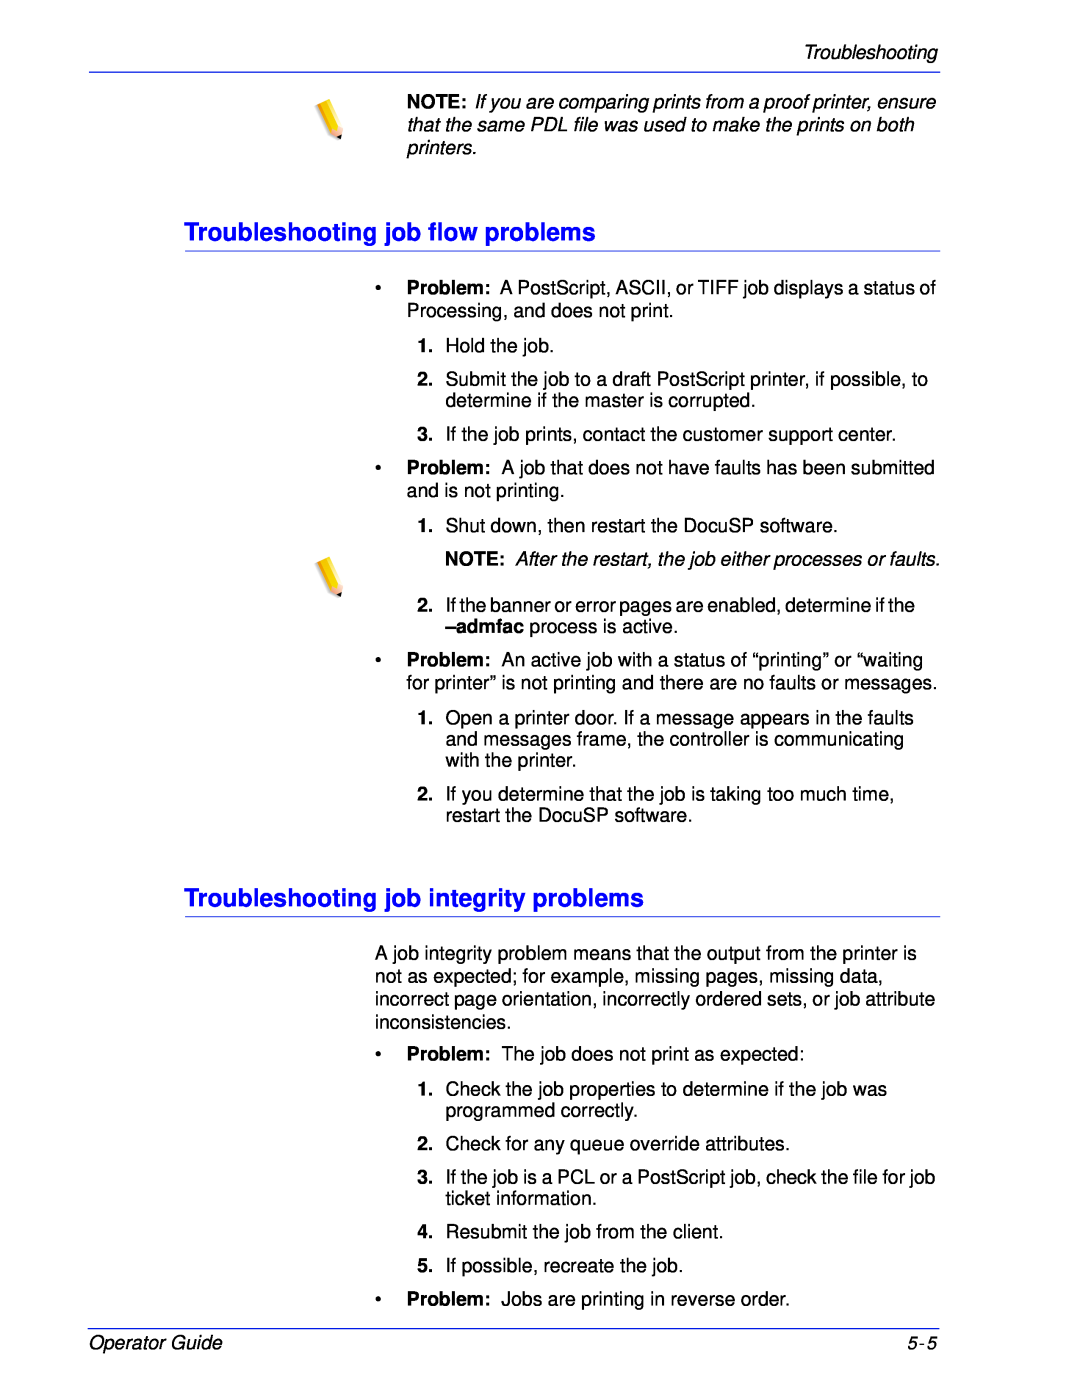 Xerox 180 EPS, 100 manual Troubleshooting job flow problems, Troubleshooting job integrity problems, Operator Guide 